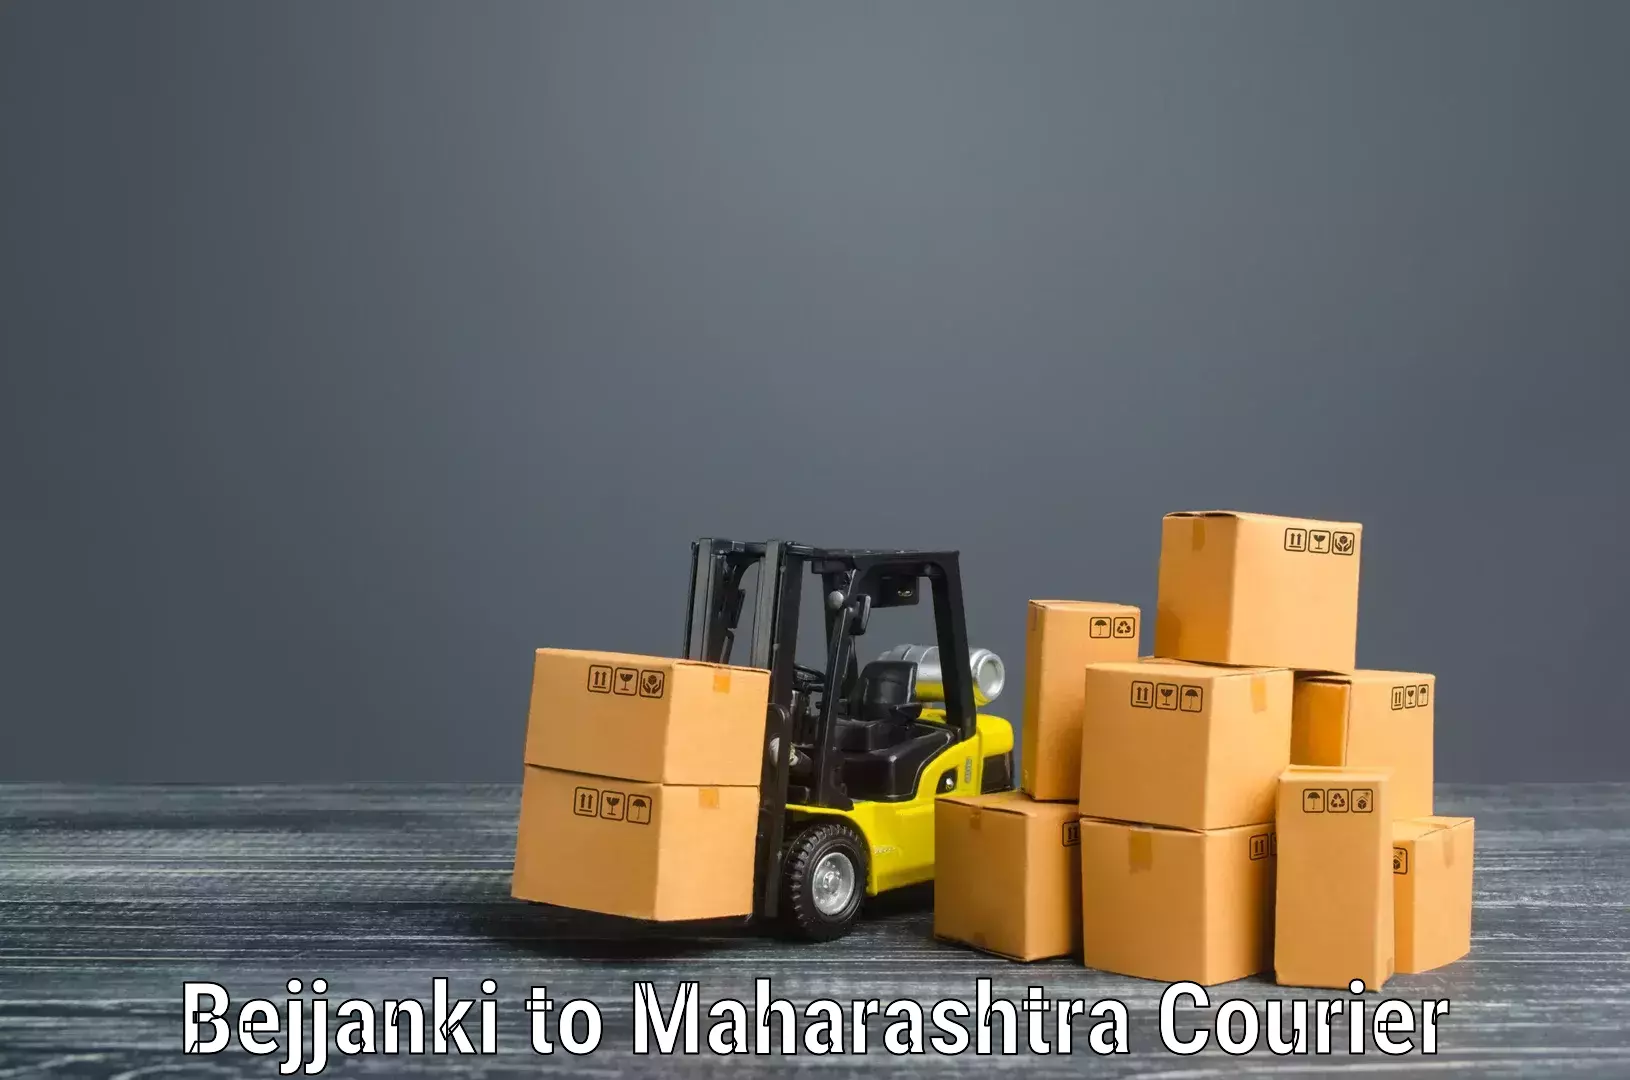 Professional moving company Bejjanki to Mumbai